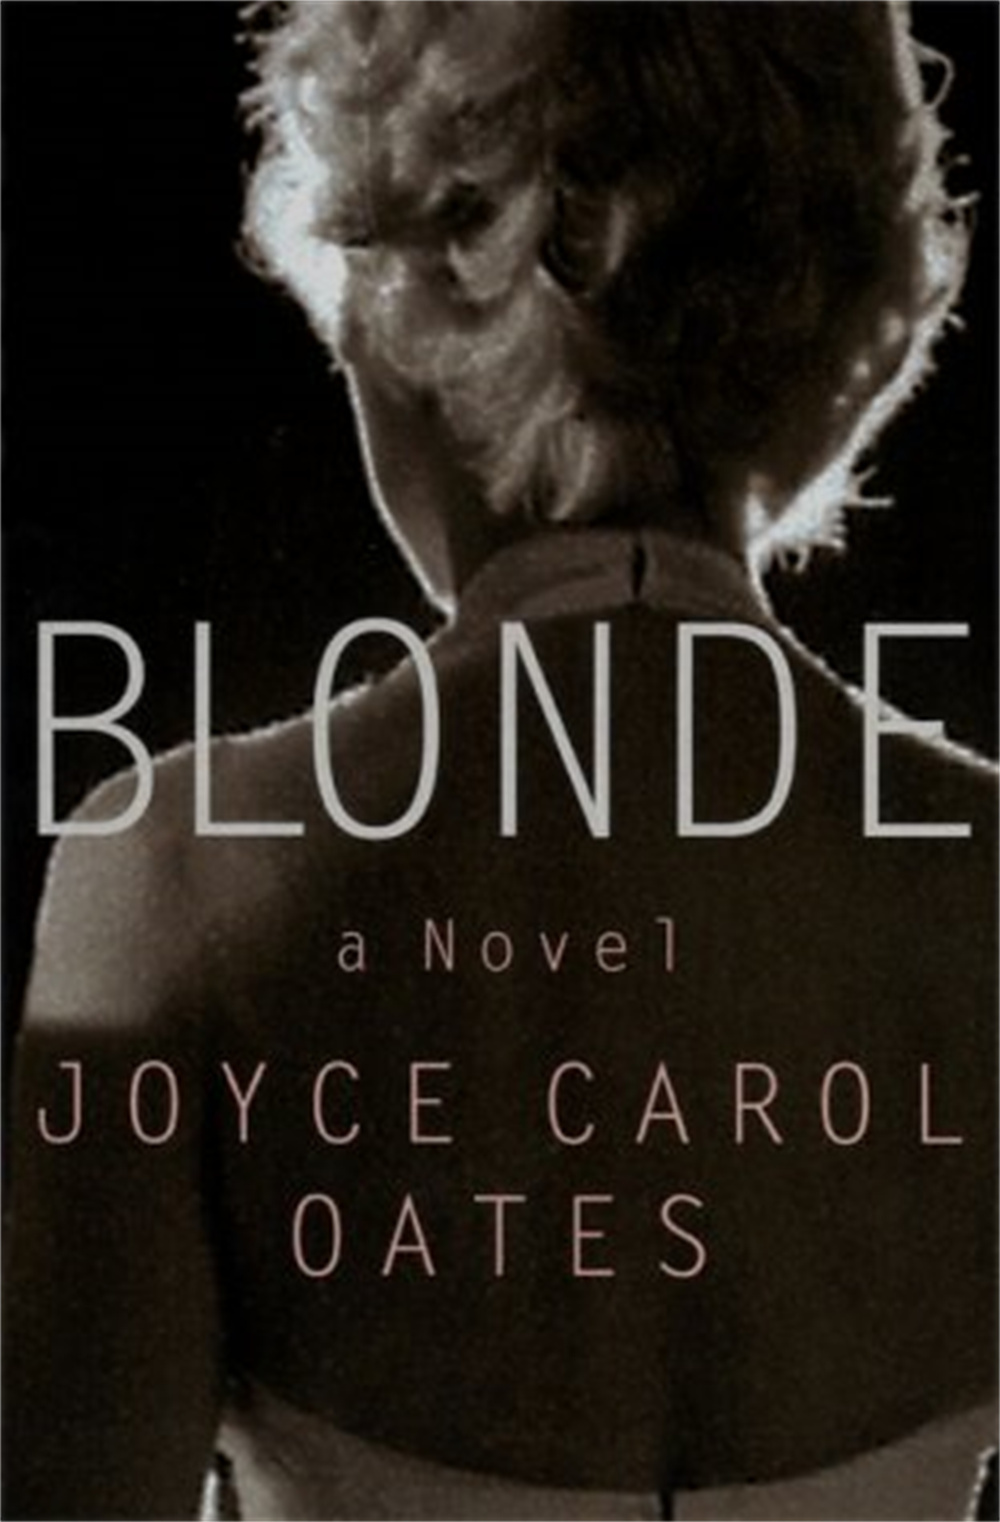 "Blonde Monroe" original novel